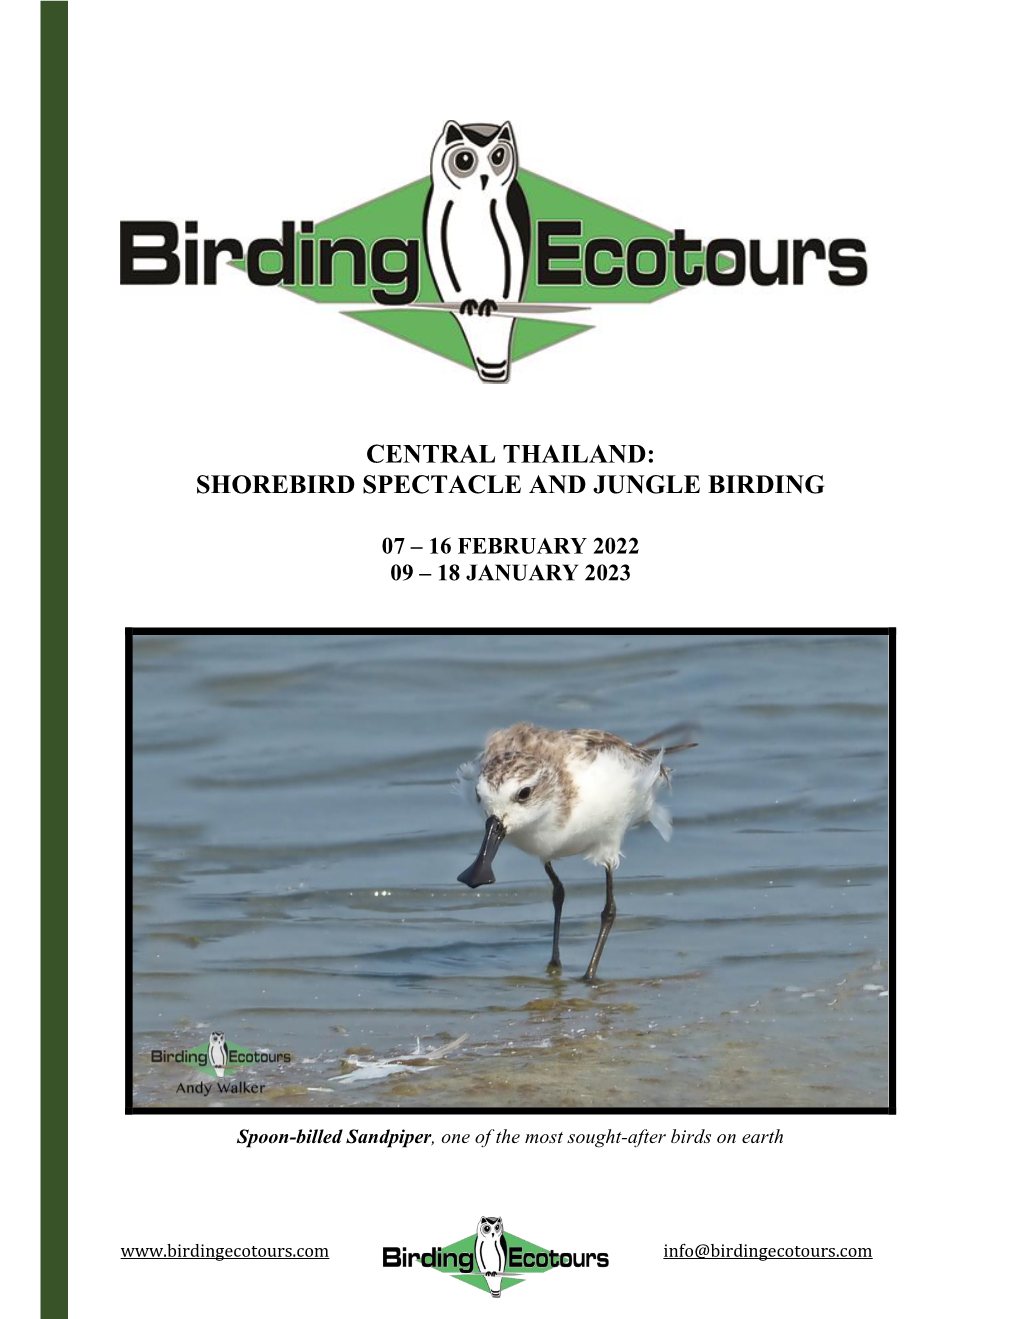 Central Thailand: Shorebird Spectacle and Jungle Birding